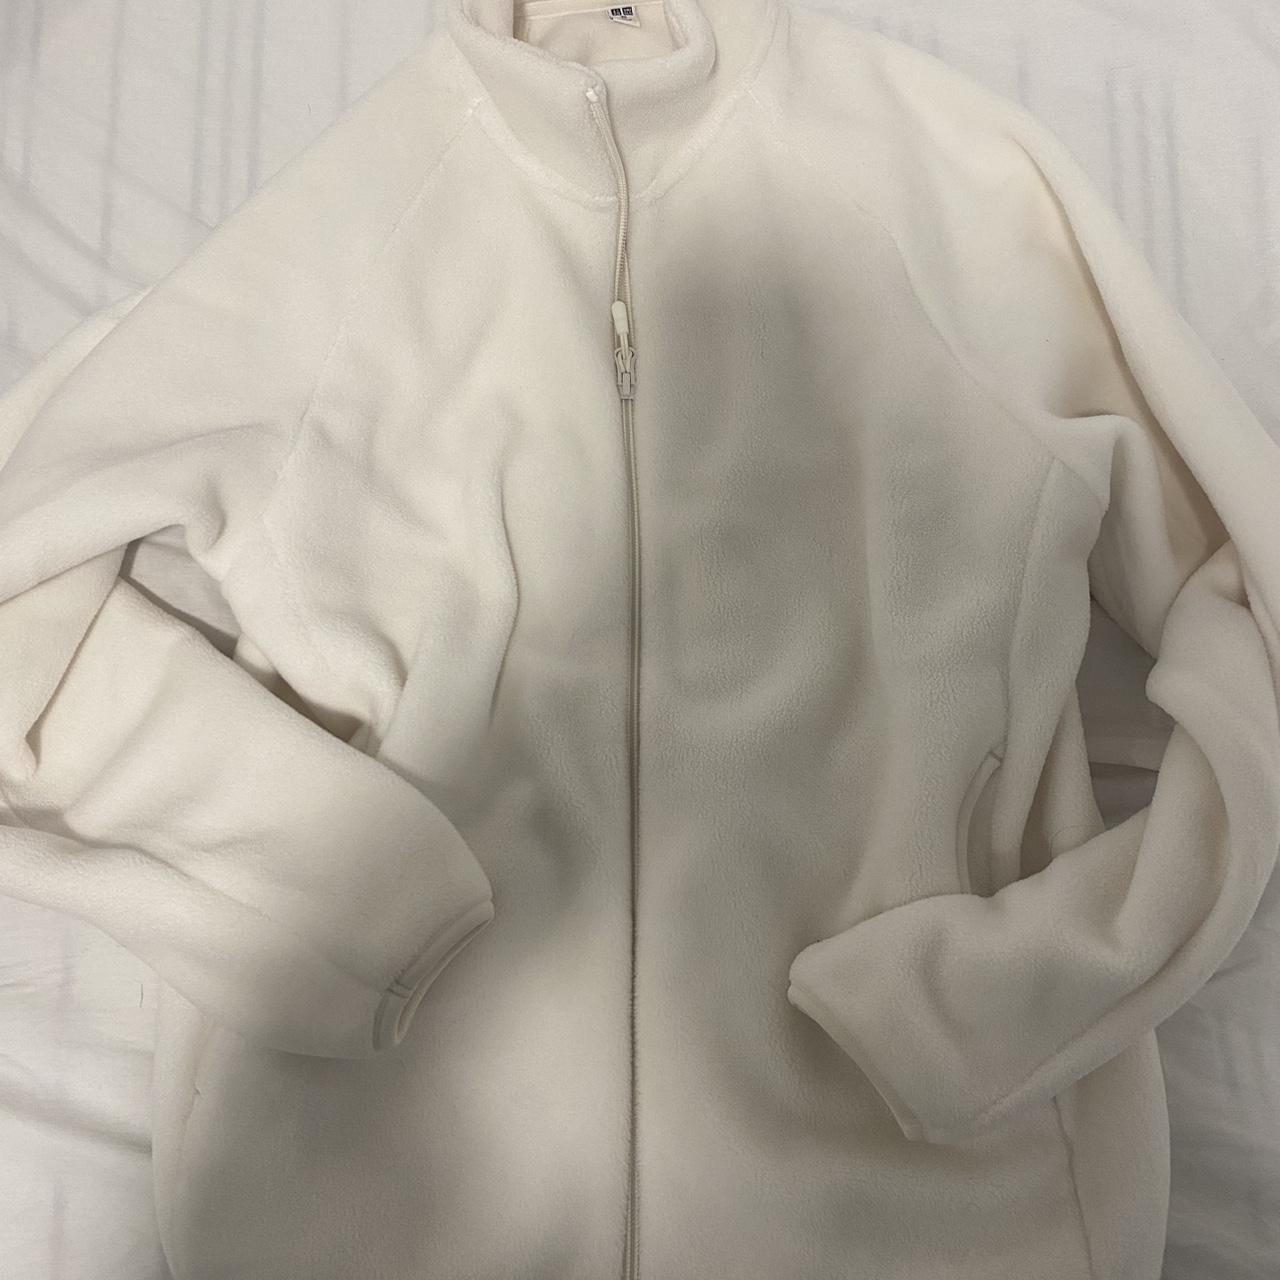 uniqlo cream white fleece jacket super soft size s - Depop